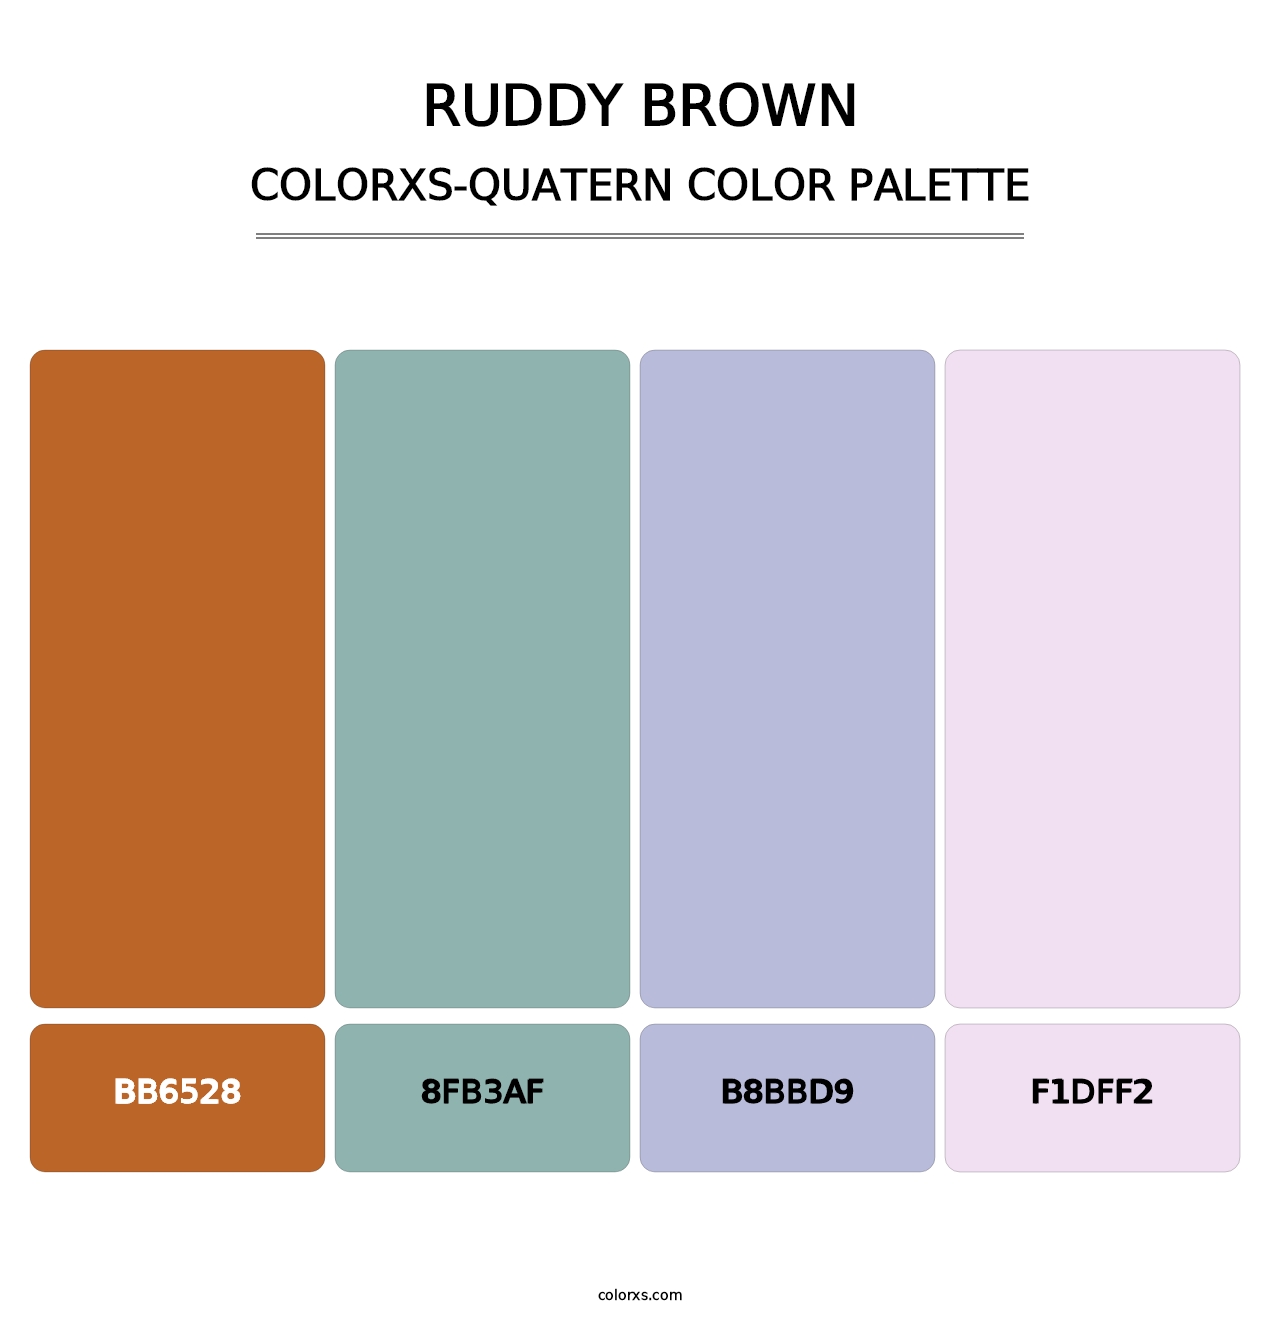 Ruddy Brown - Colorxs Quatern Palette